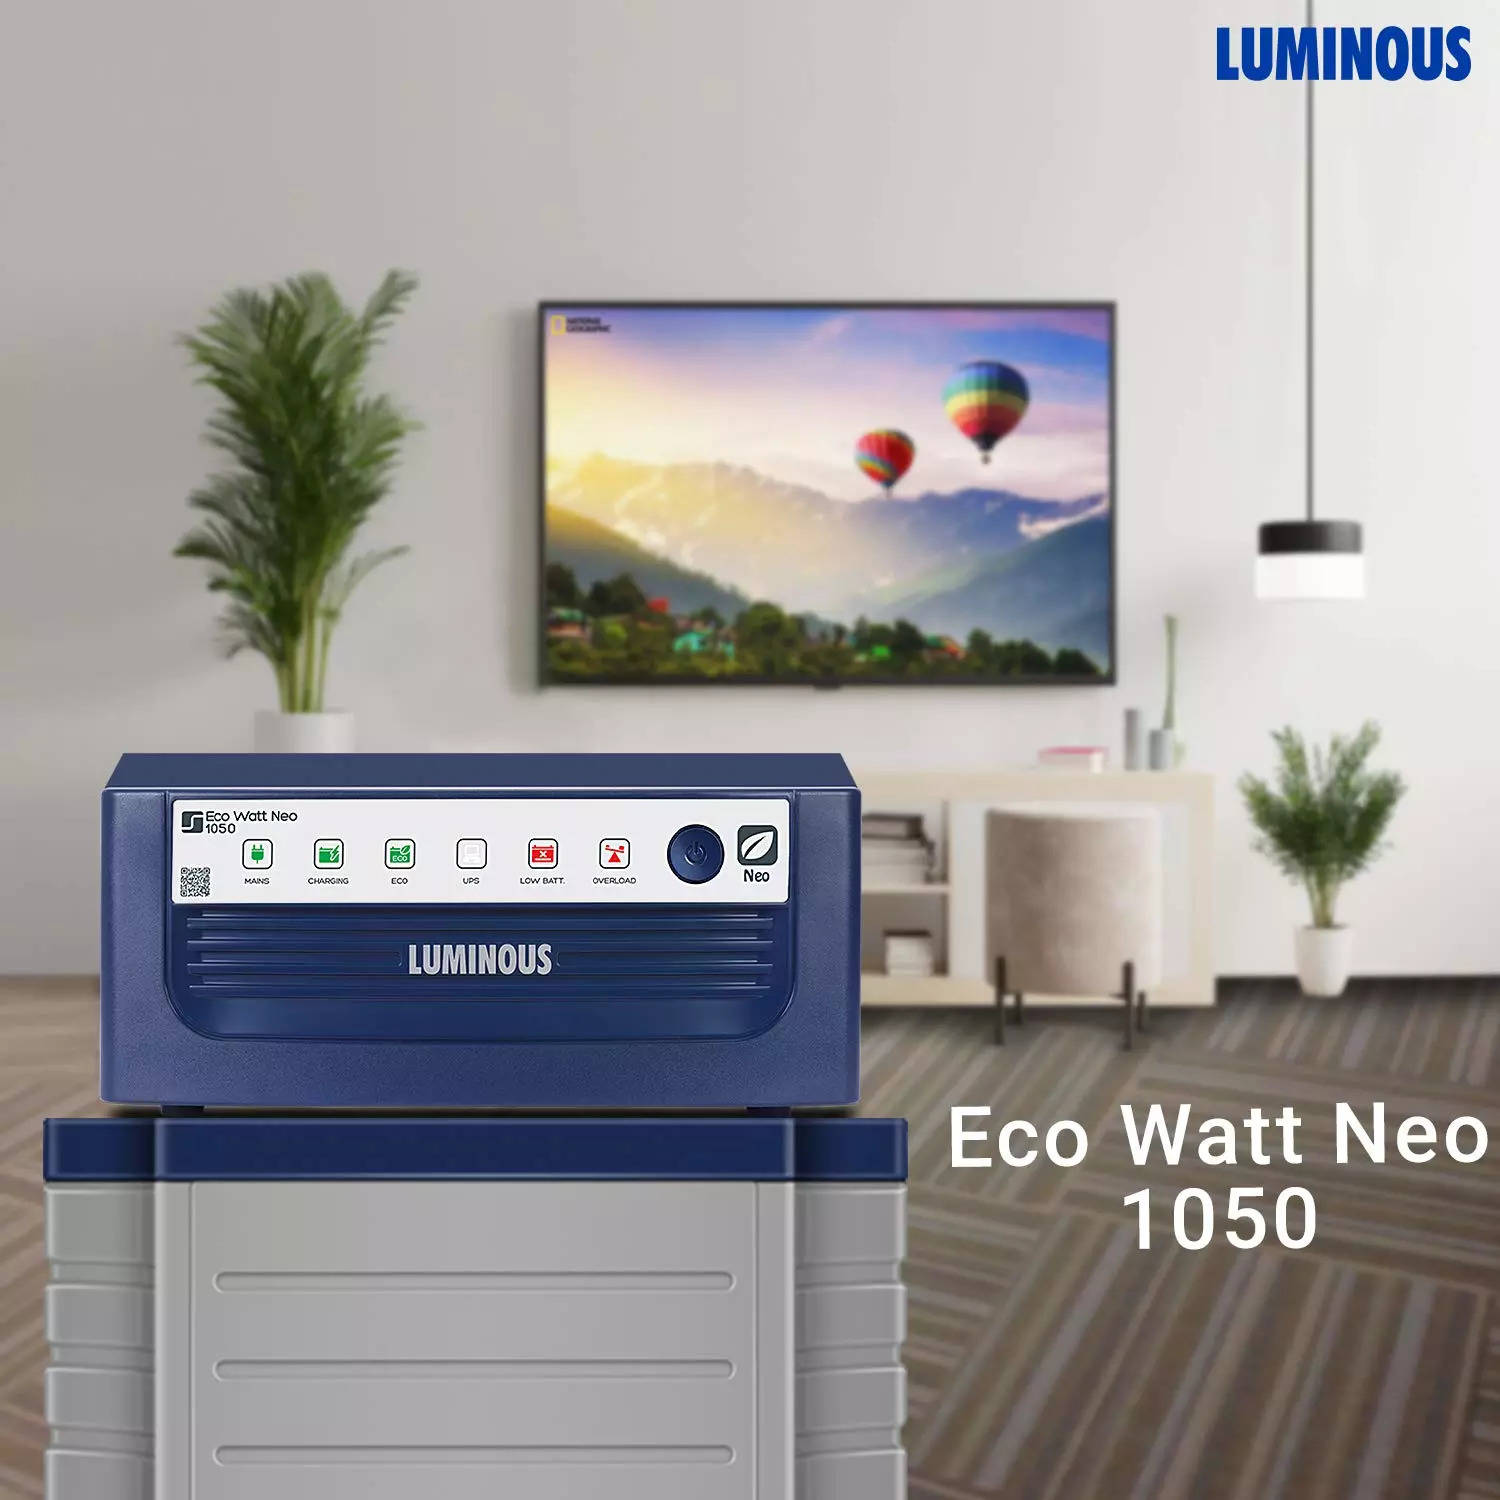 Single Luminous Eco Watt Neo 1050 Inverter, For Small Shops, LED